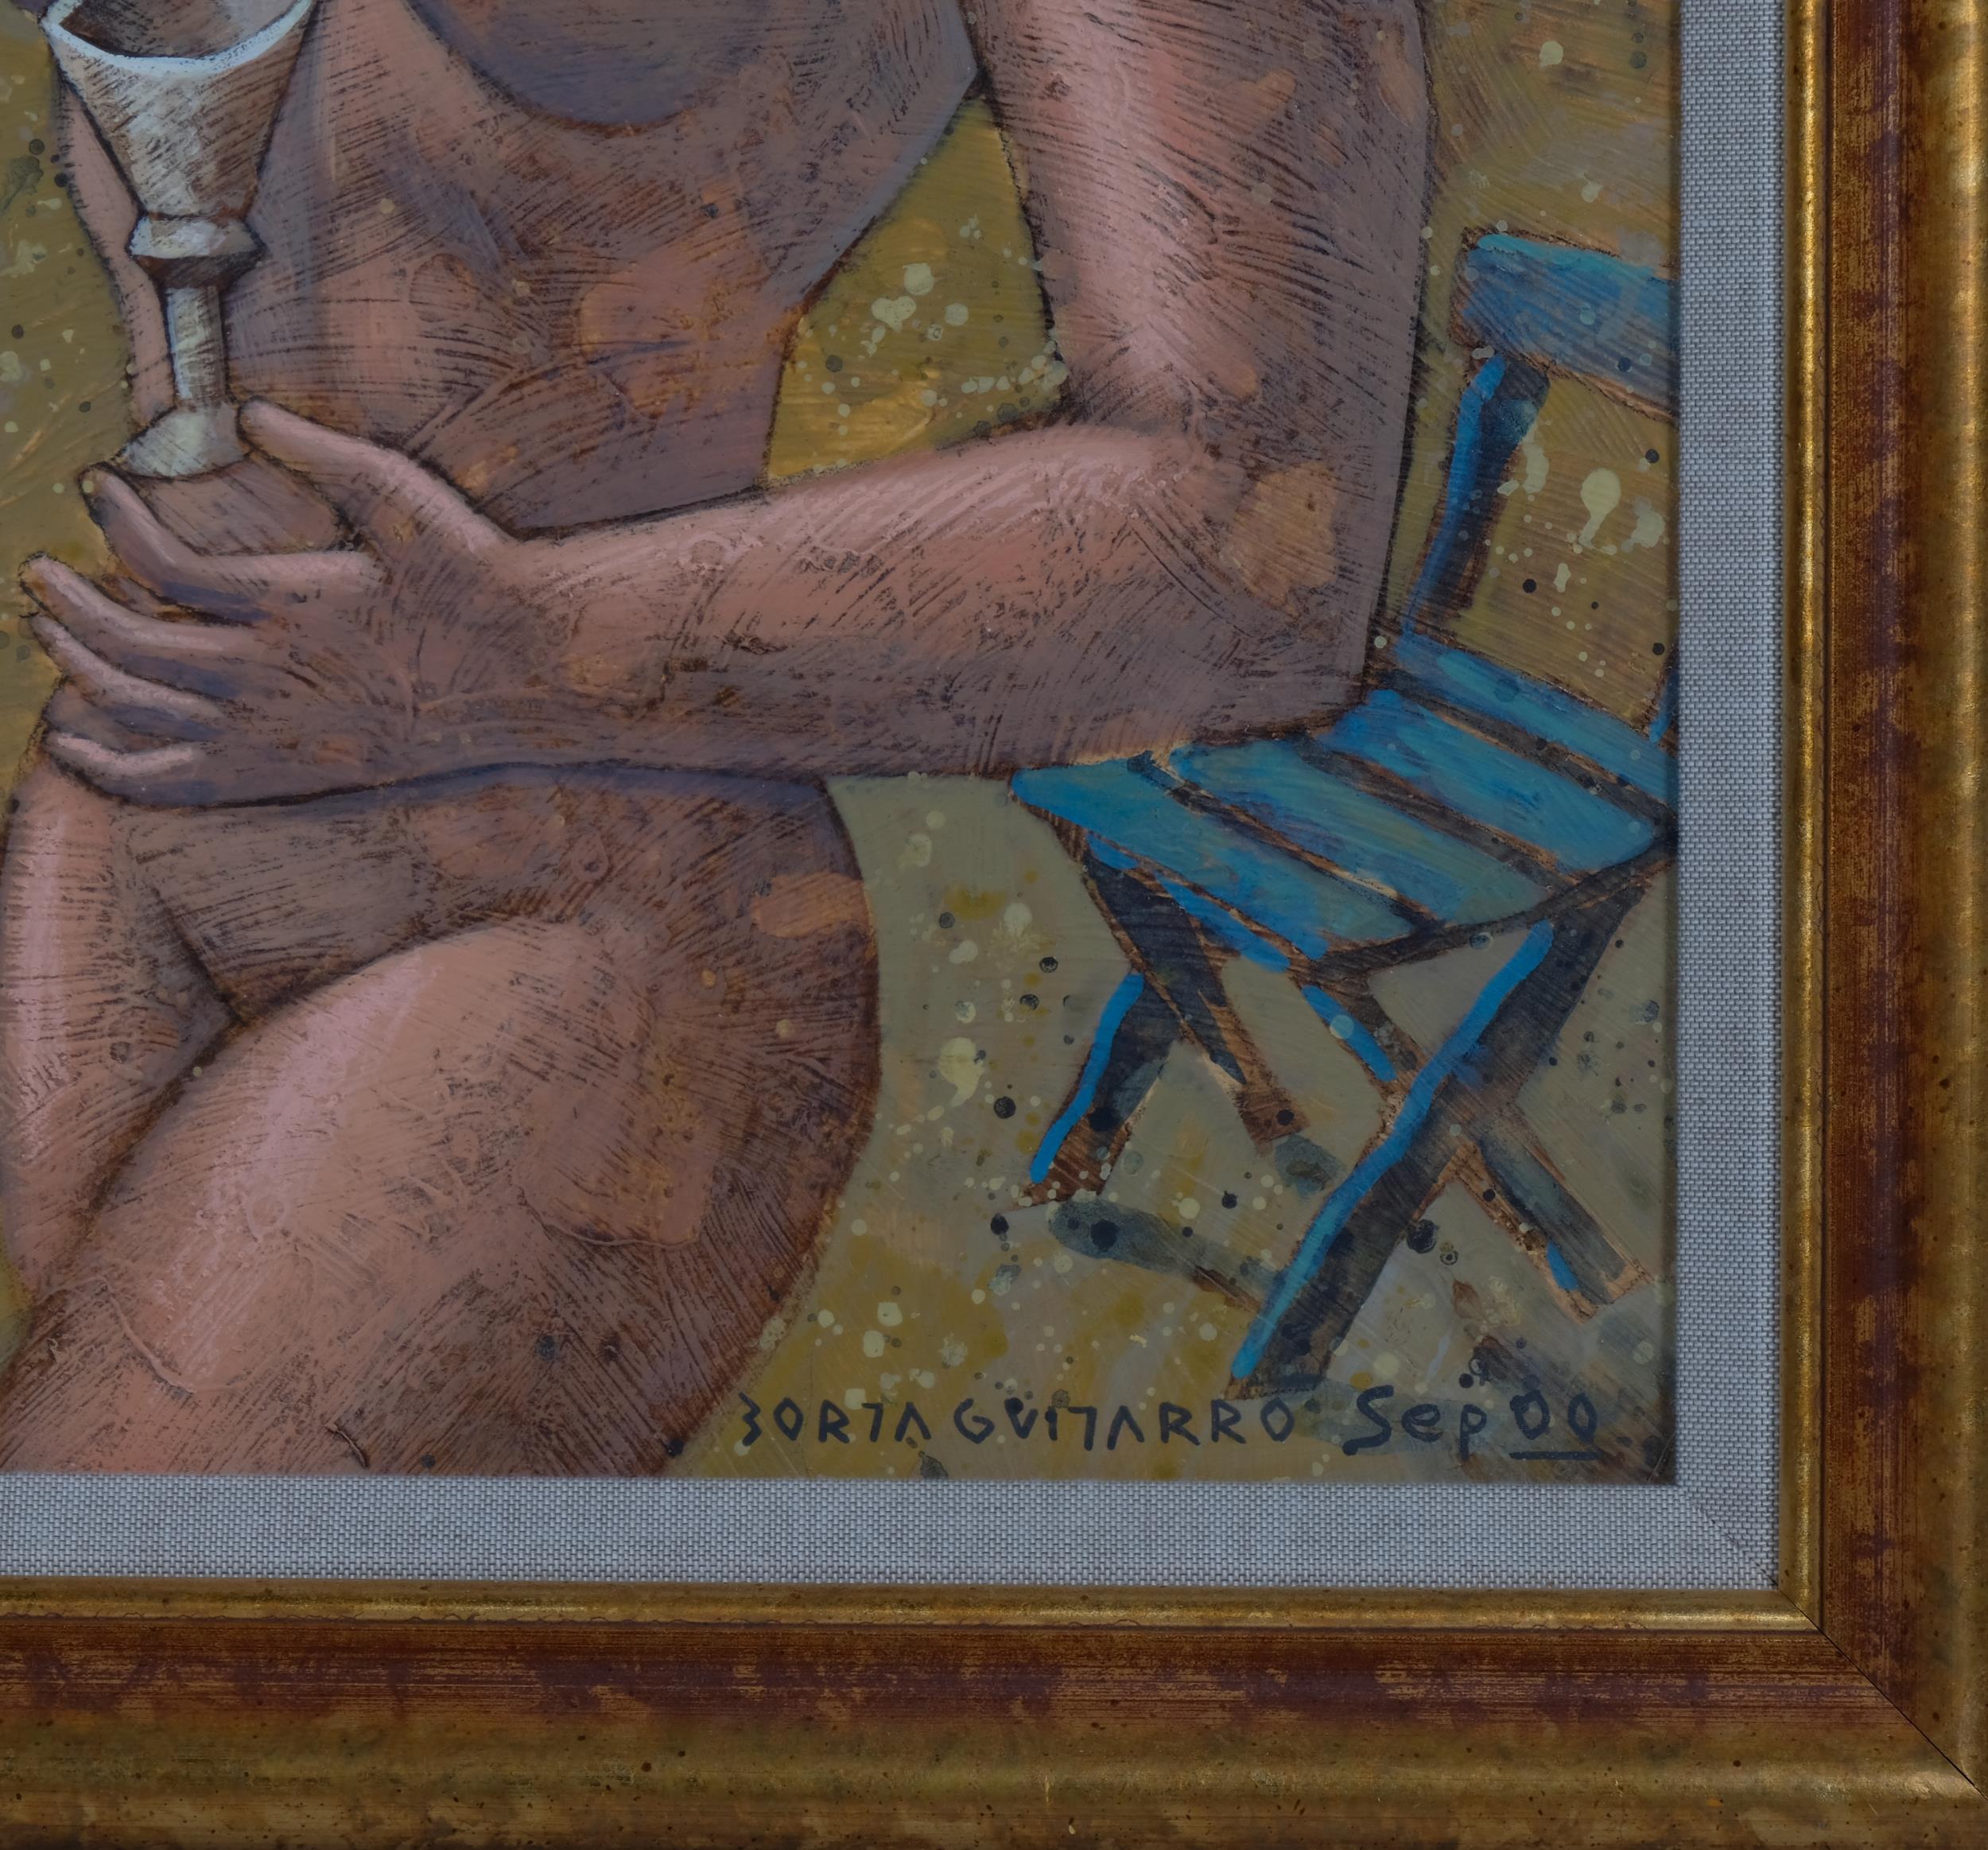 Borja Guijarro (born 1963), Pescaito, oil on board, signed and dated 2000, 42cm x 35cm, framed - Image 3 of 4